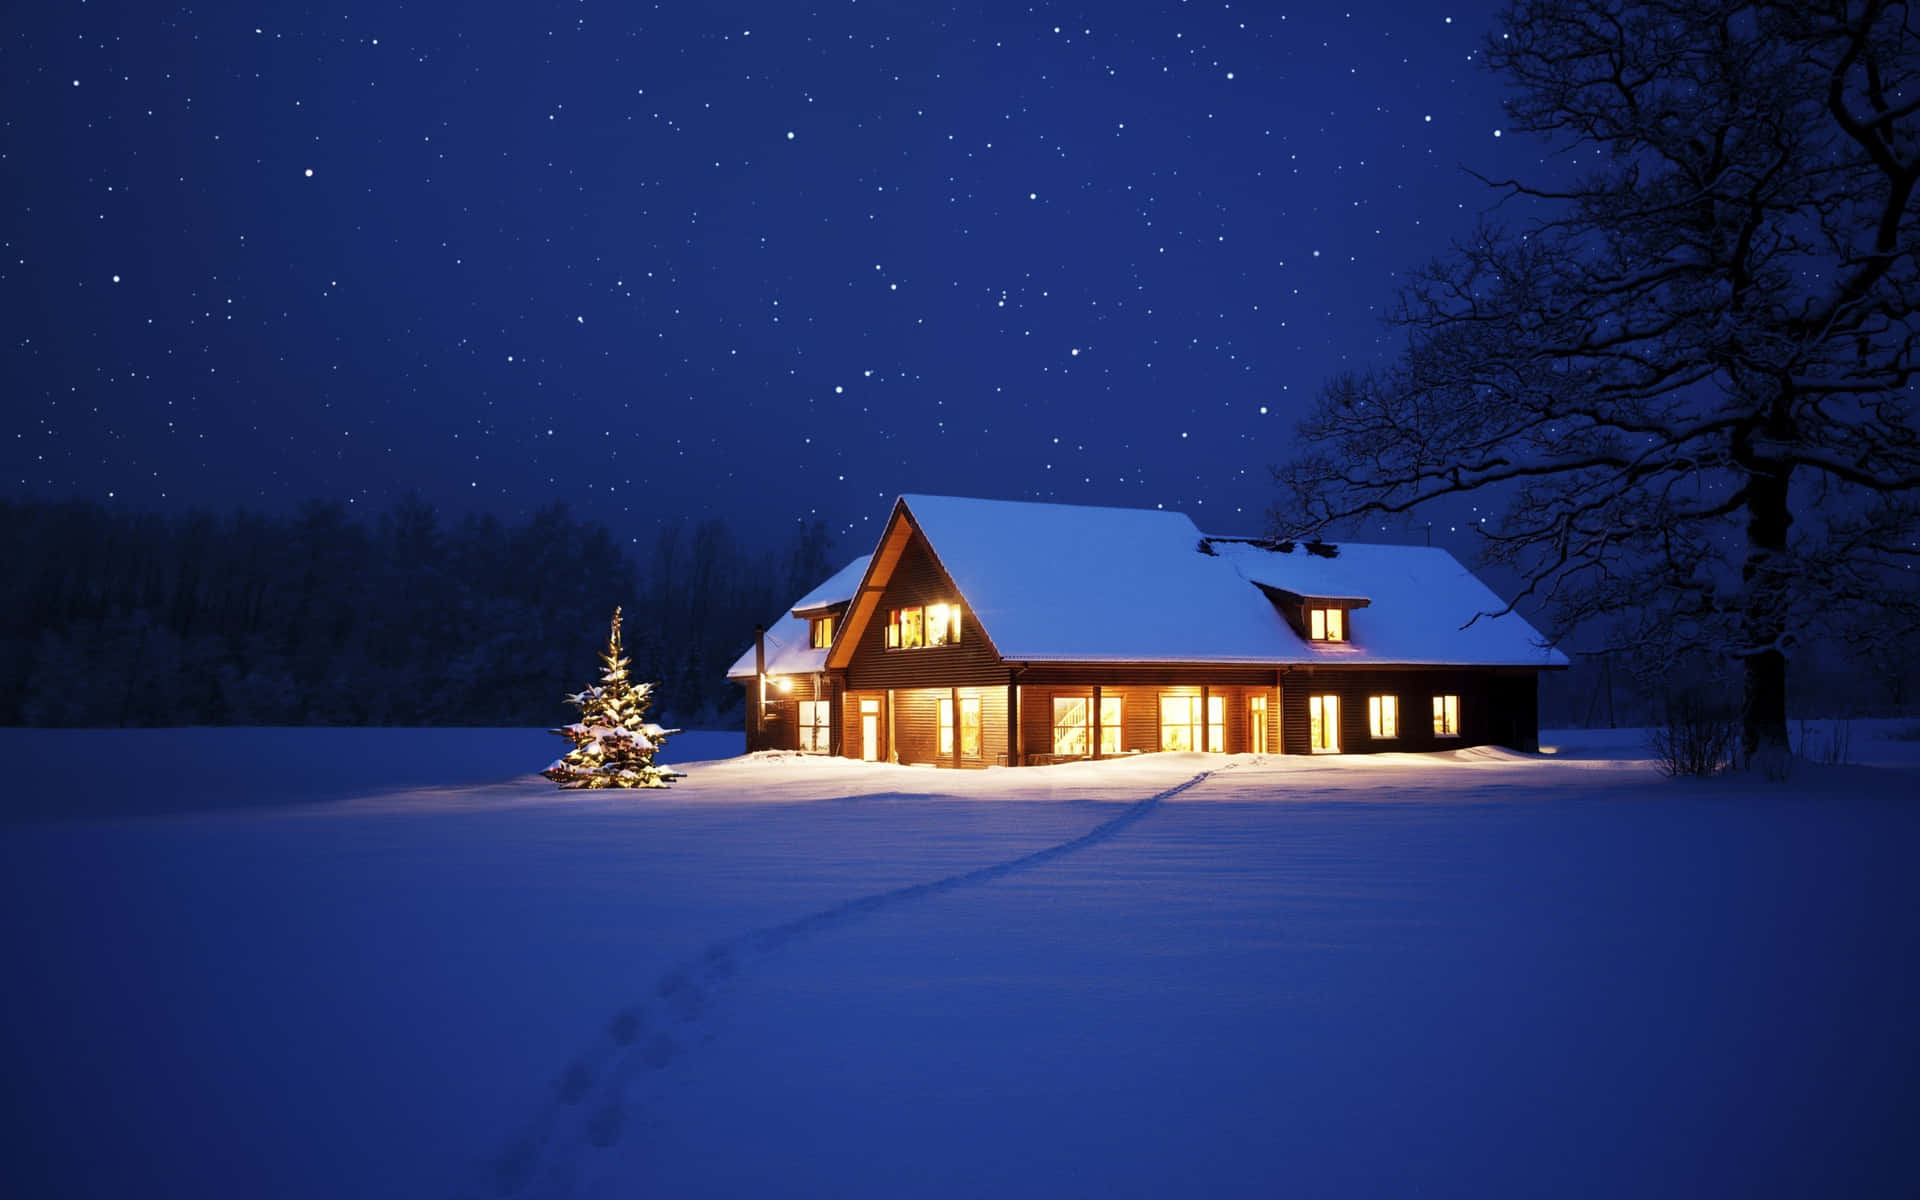 Fondode Escritorio De Noche Invernal Con Una Casa Festiva Fondo de pantalla